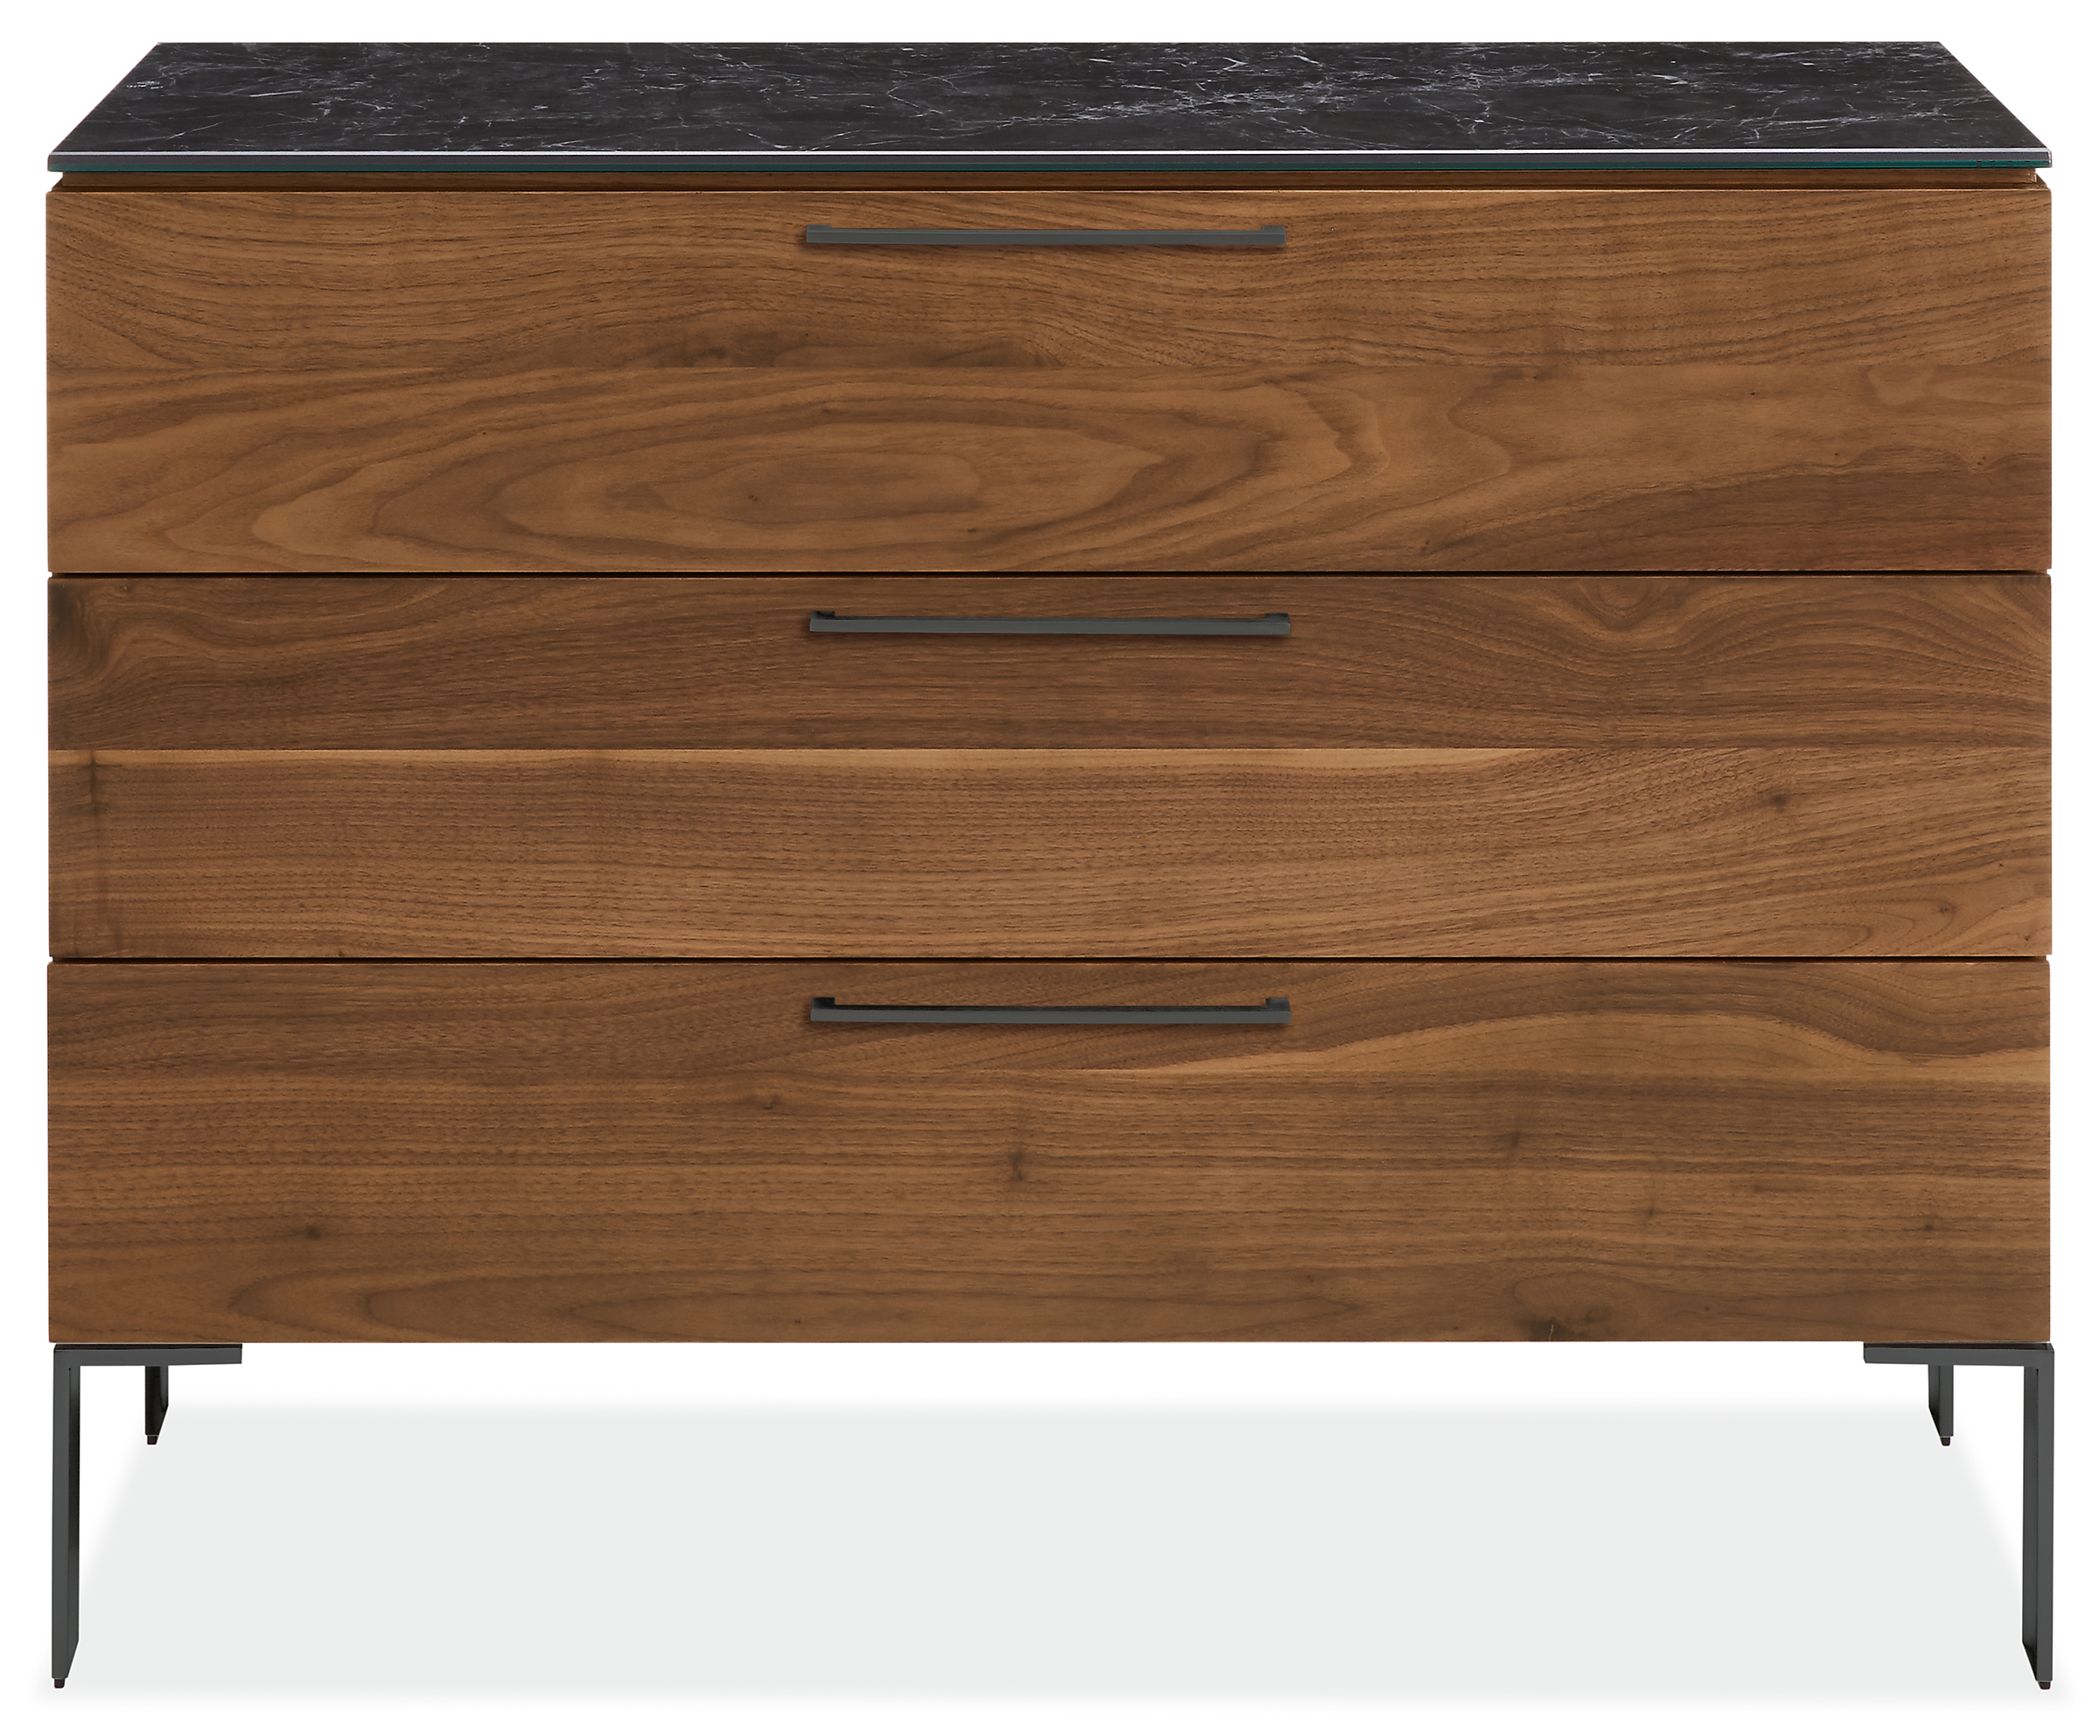 Kenwood 42w 20d 33h Three-Drawer Dresser with Ceramic Top